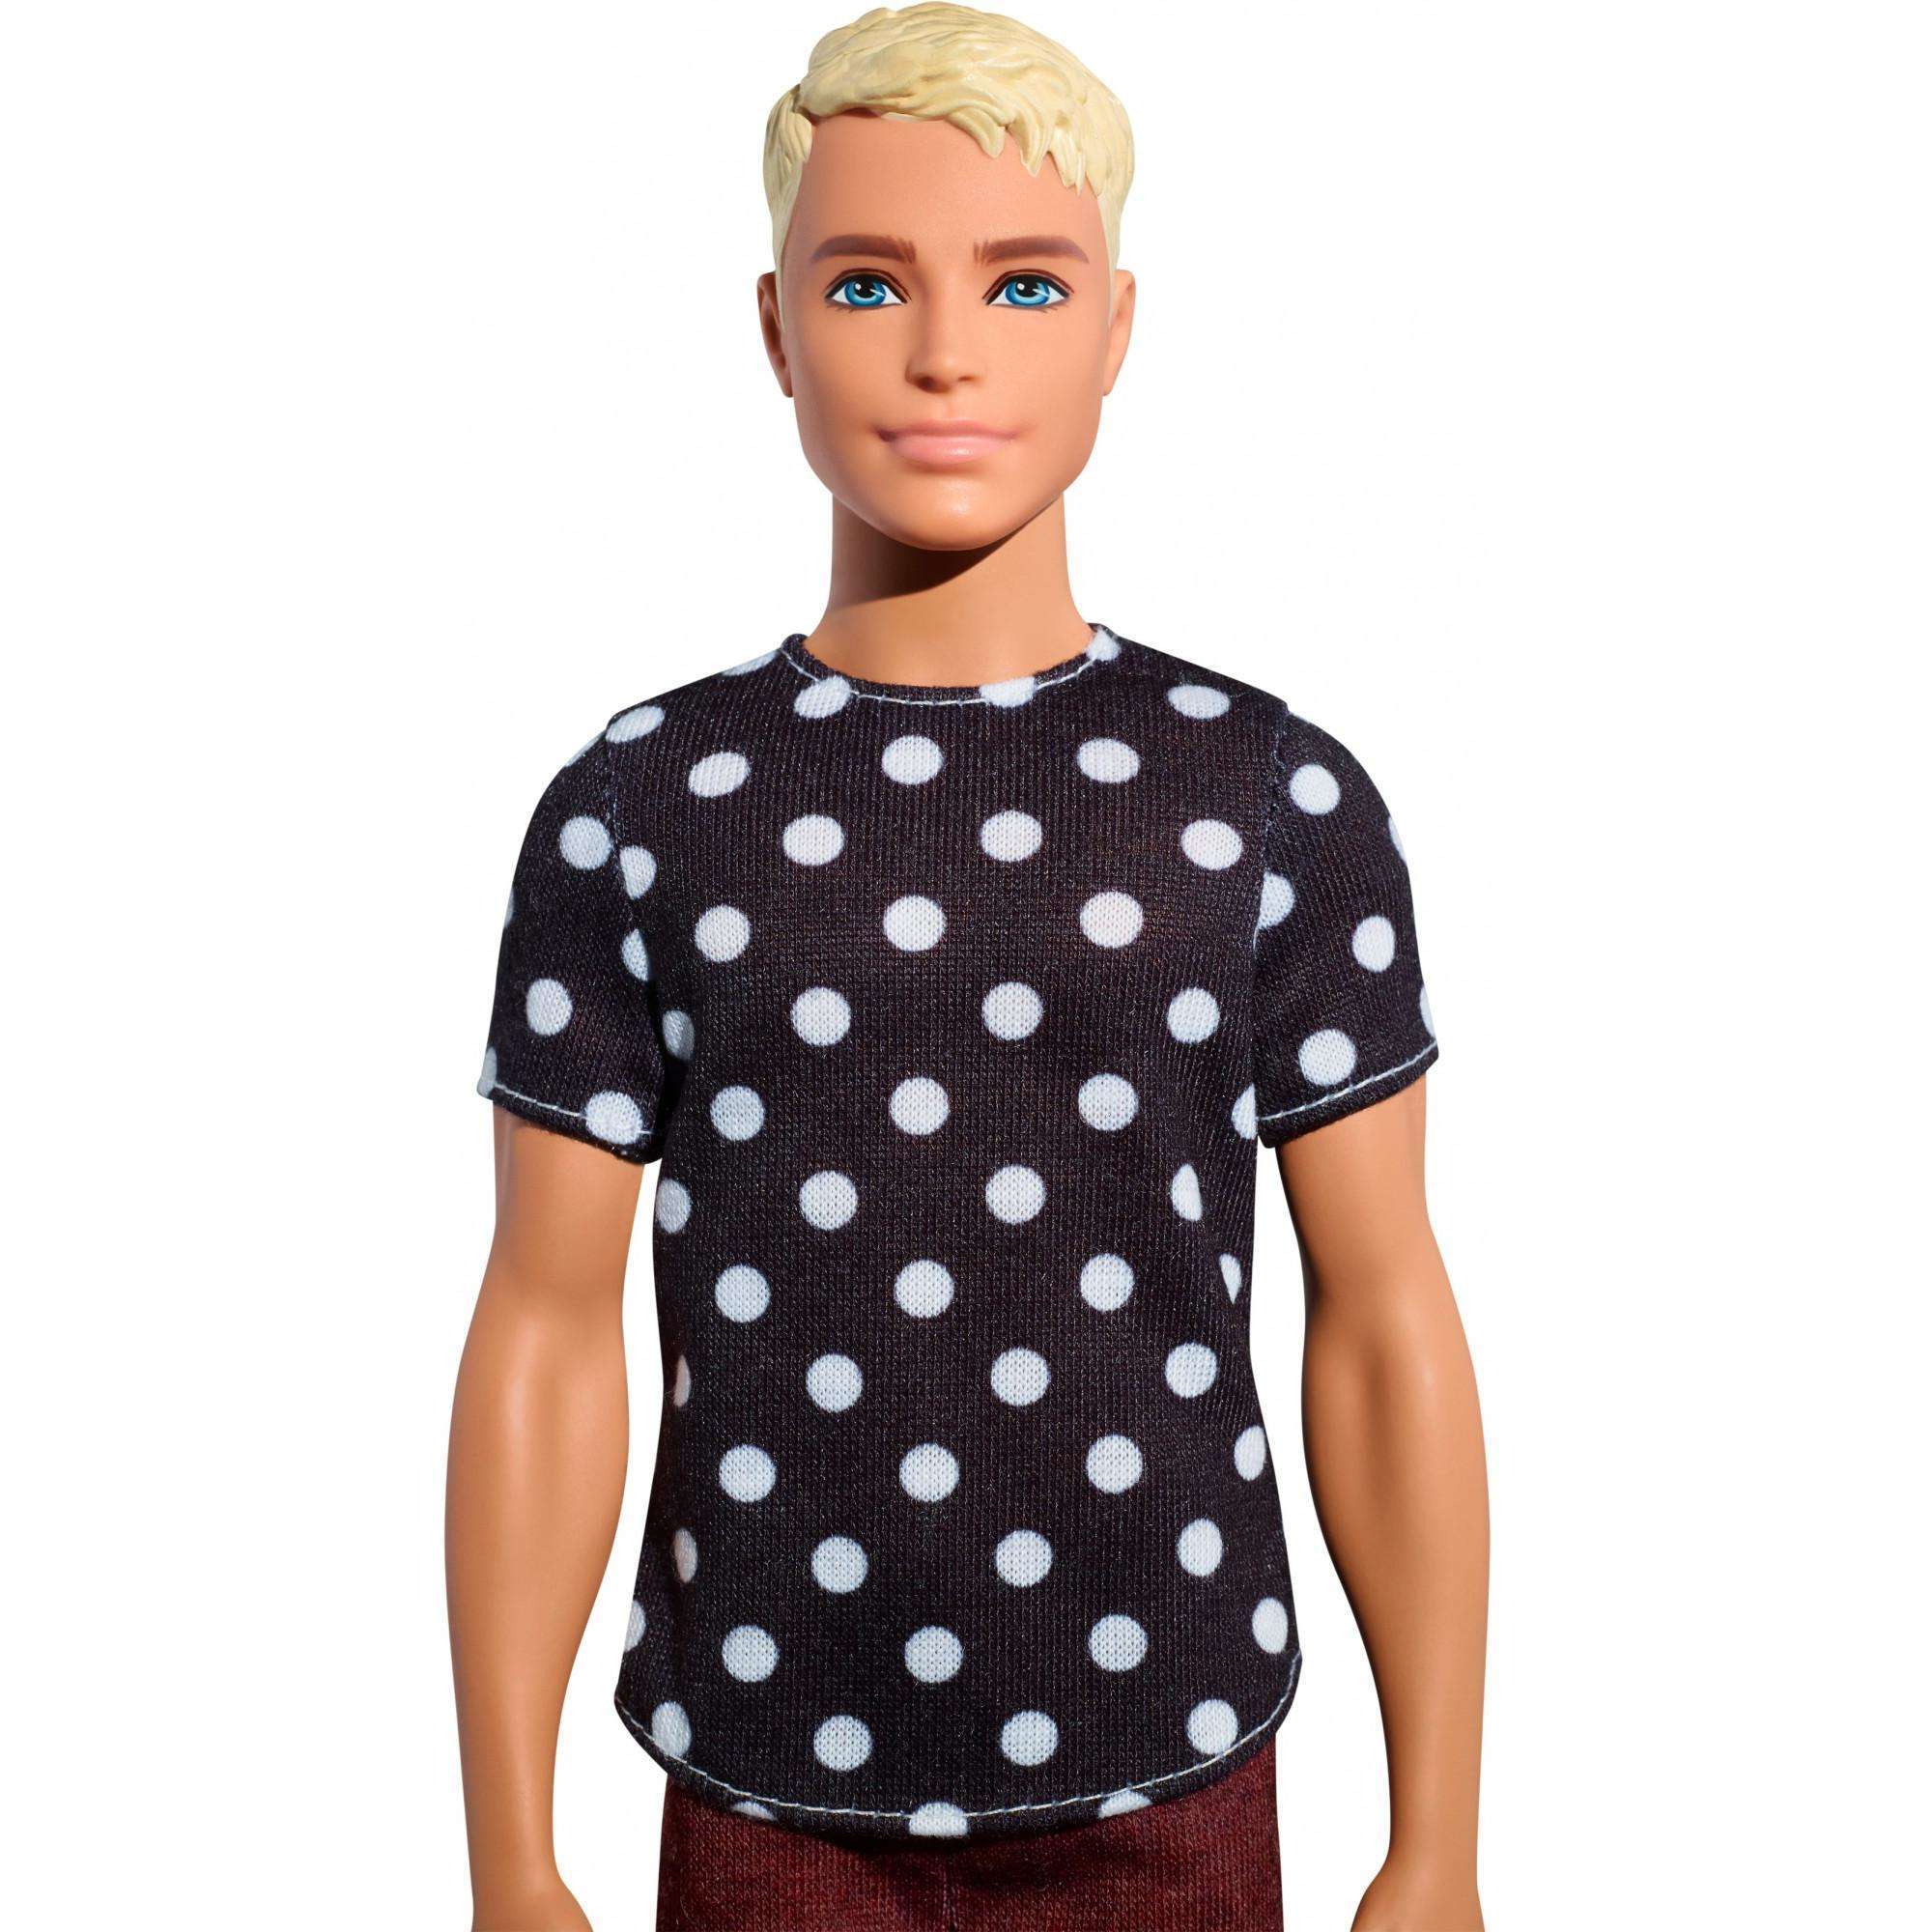 Barbie Fashionistas Ken Doll Wearing Polka Dot Top & Red Pants - image 3 of 5